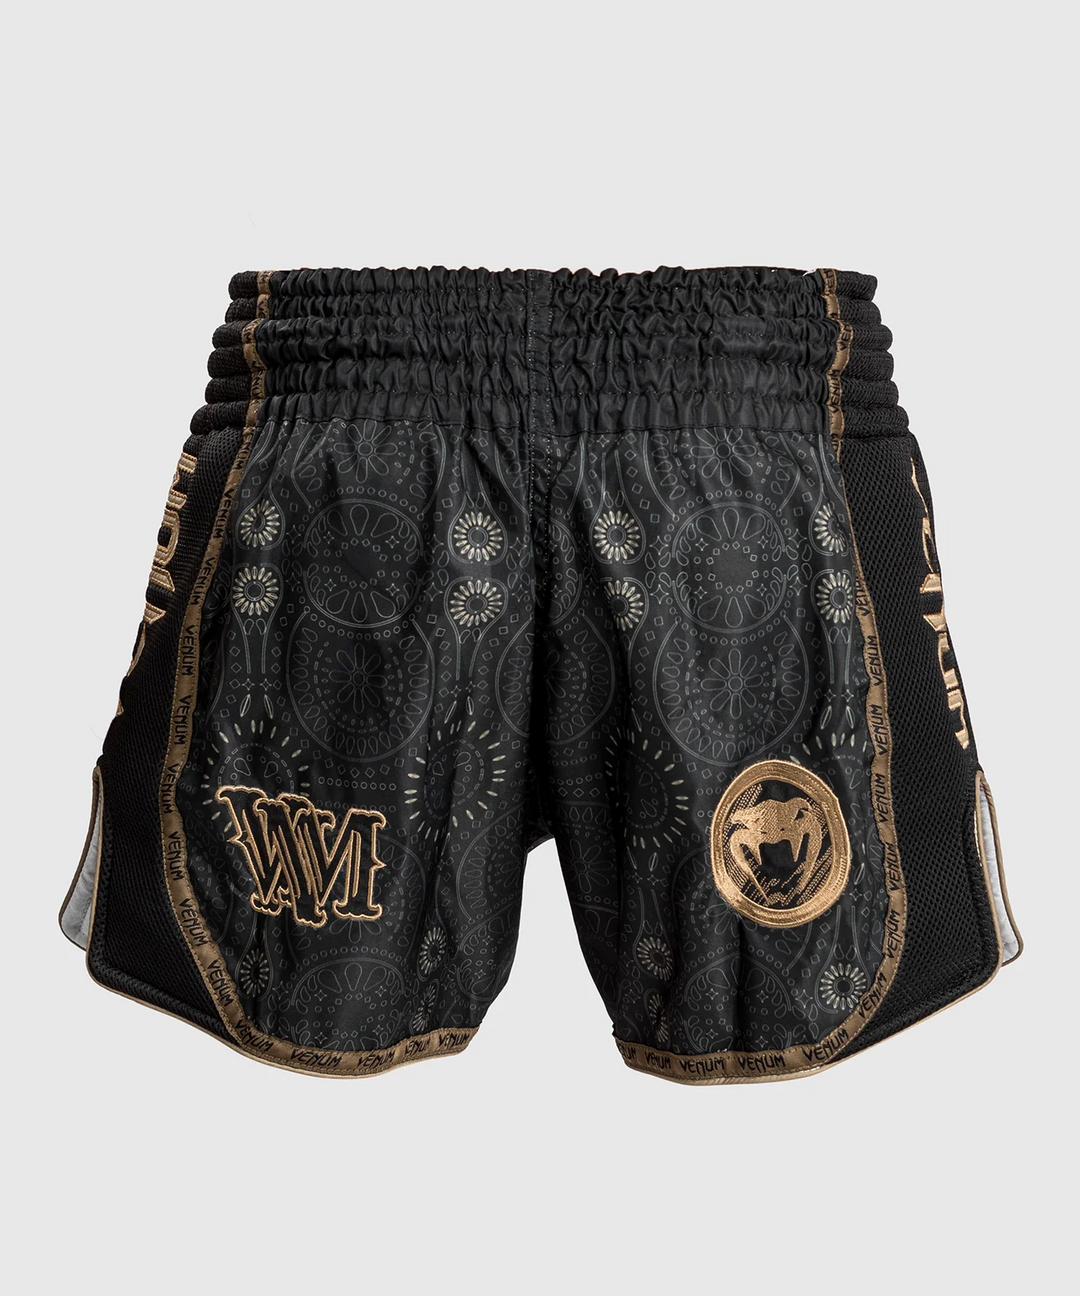 Venum Santa Muerta Dark Side Muay Thai Shorts - Black/Brown